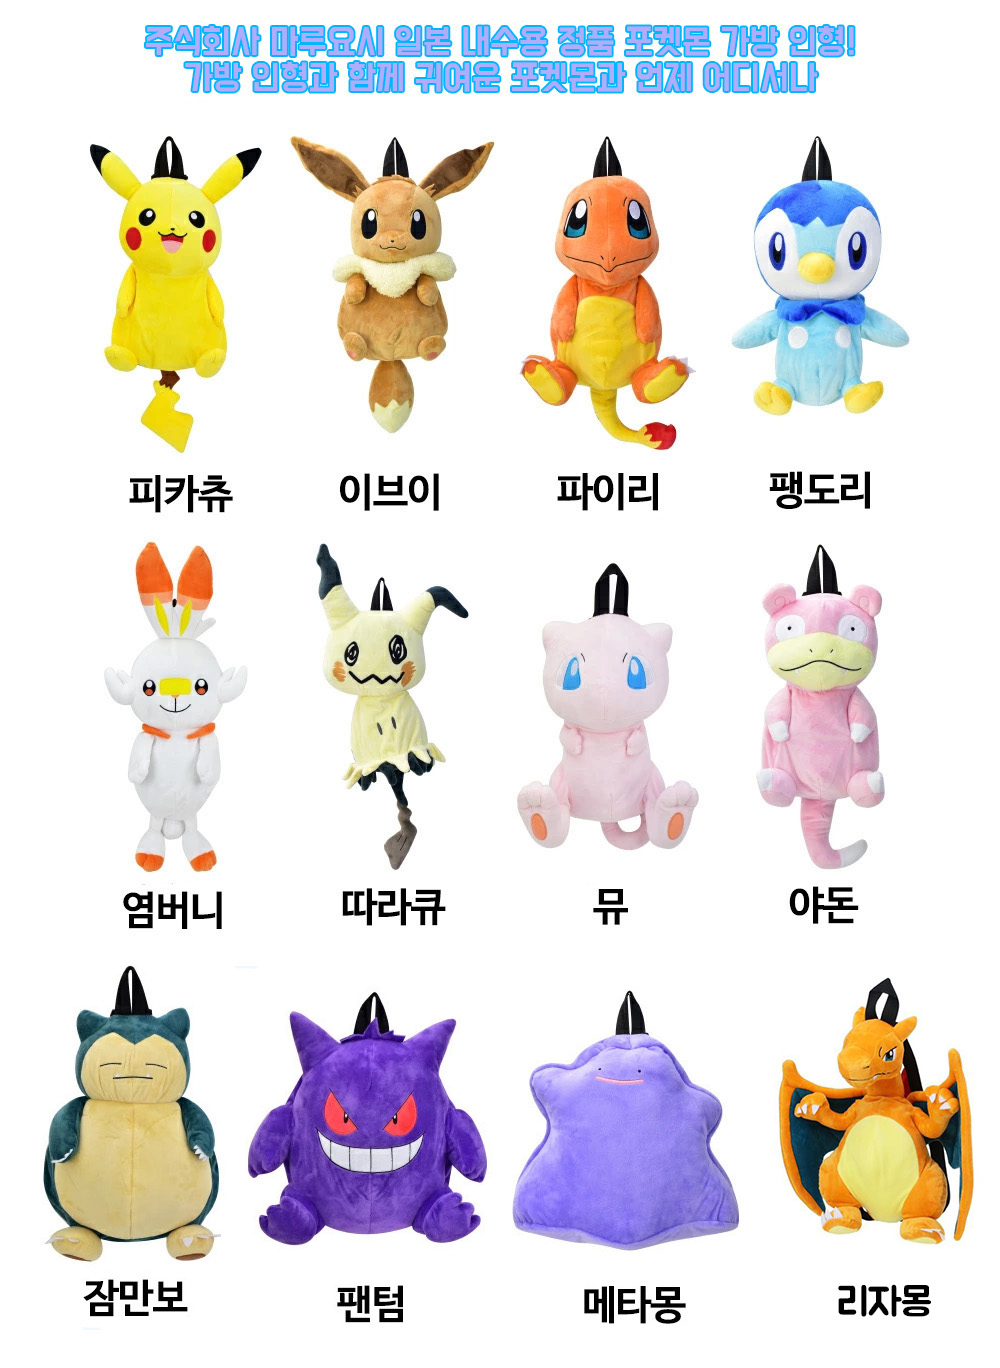 Gmarket - [포켓몬스터]Pokemon /Pikachu/Snorlax/Mew/Fairi/Eevee/Fantom/Ditto/Mimikyu/Charizard/Backpack/Bag/Doll